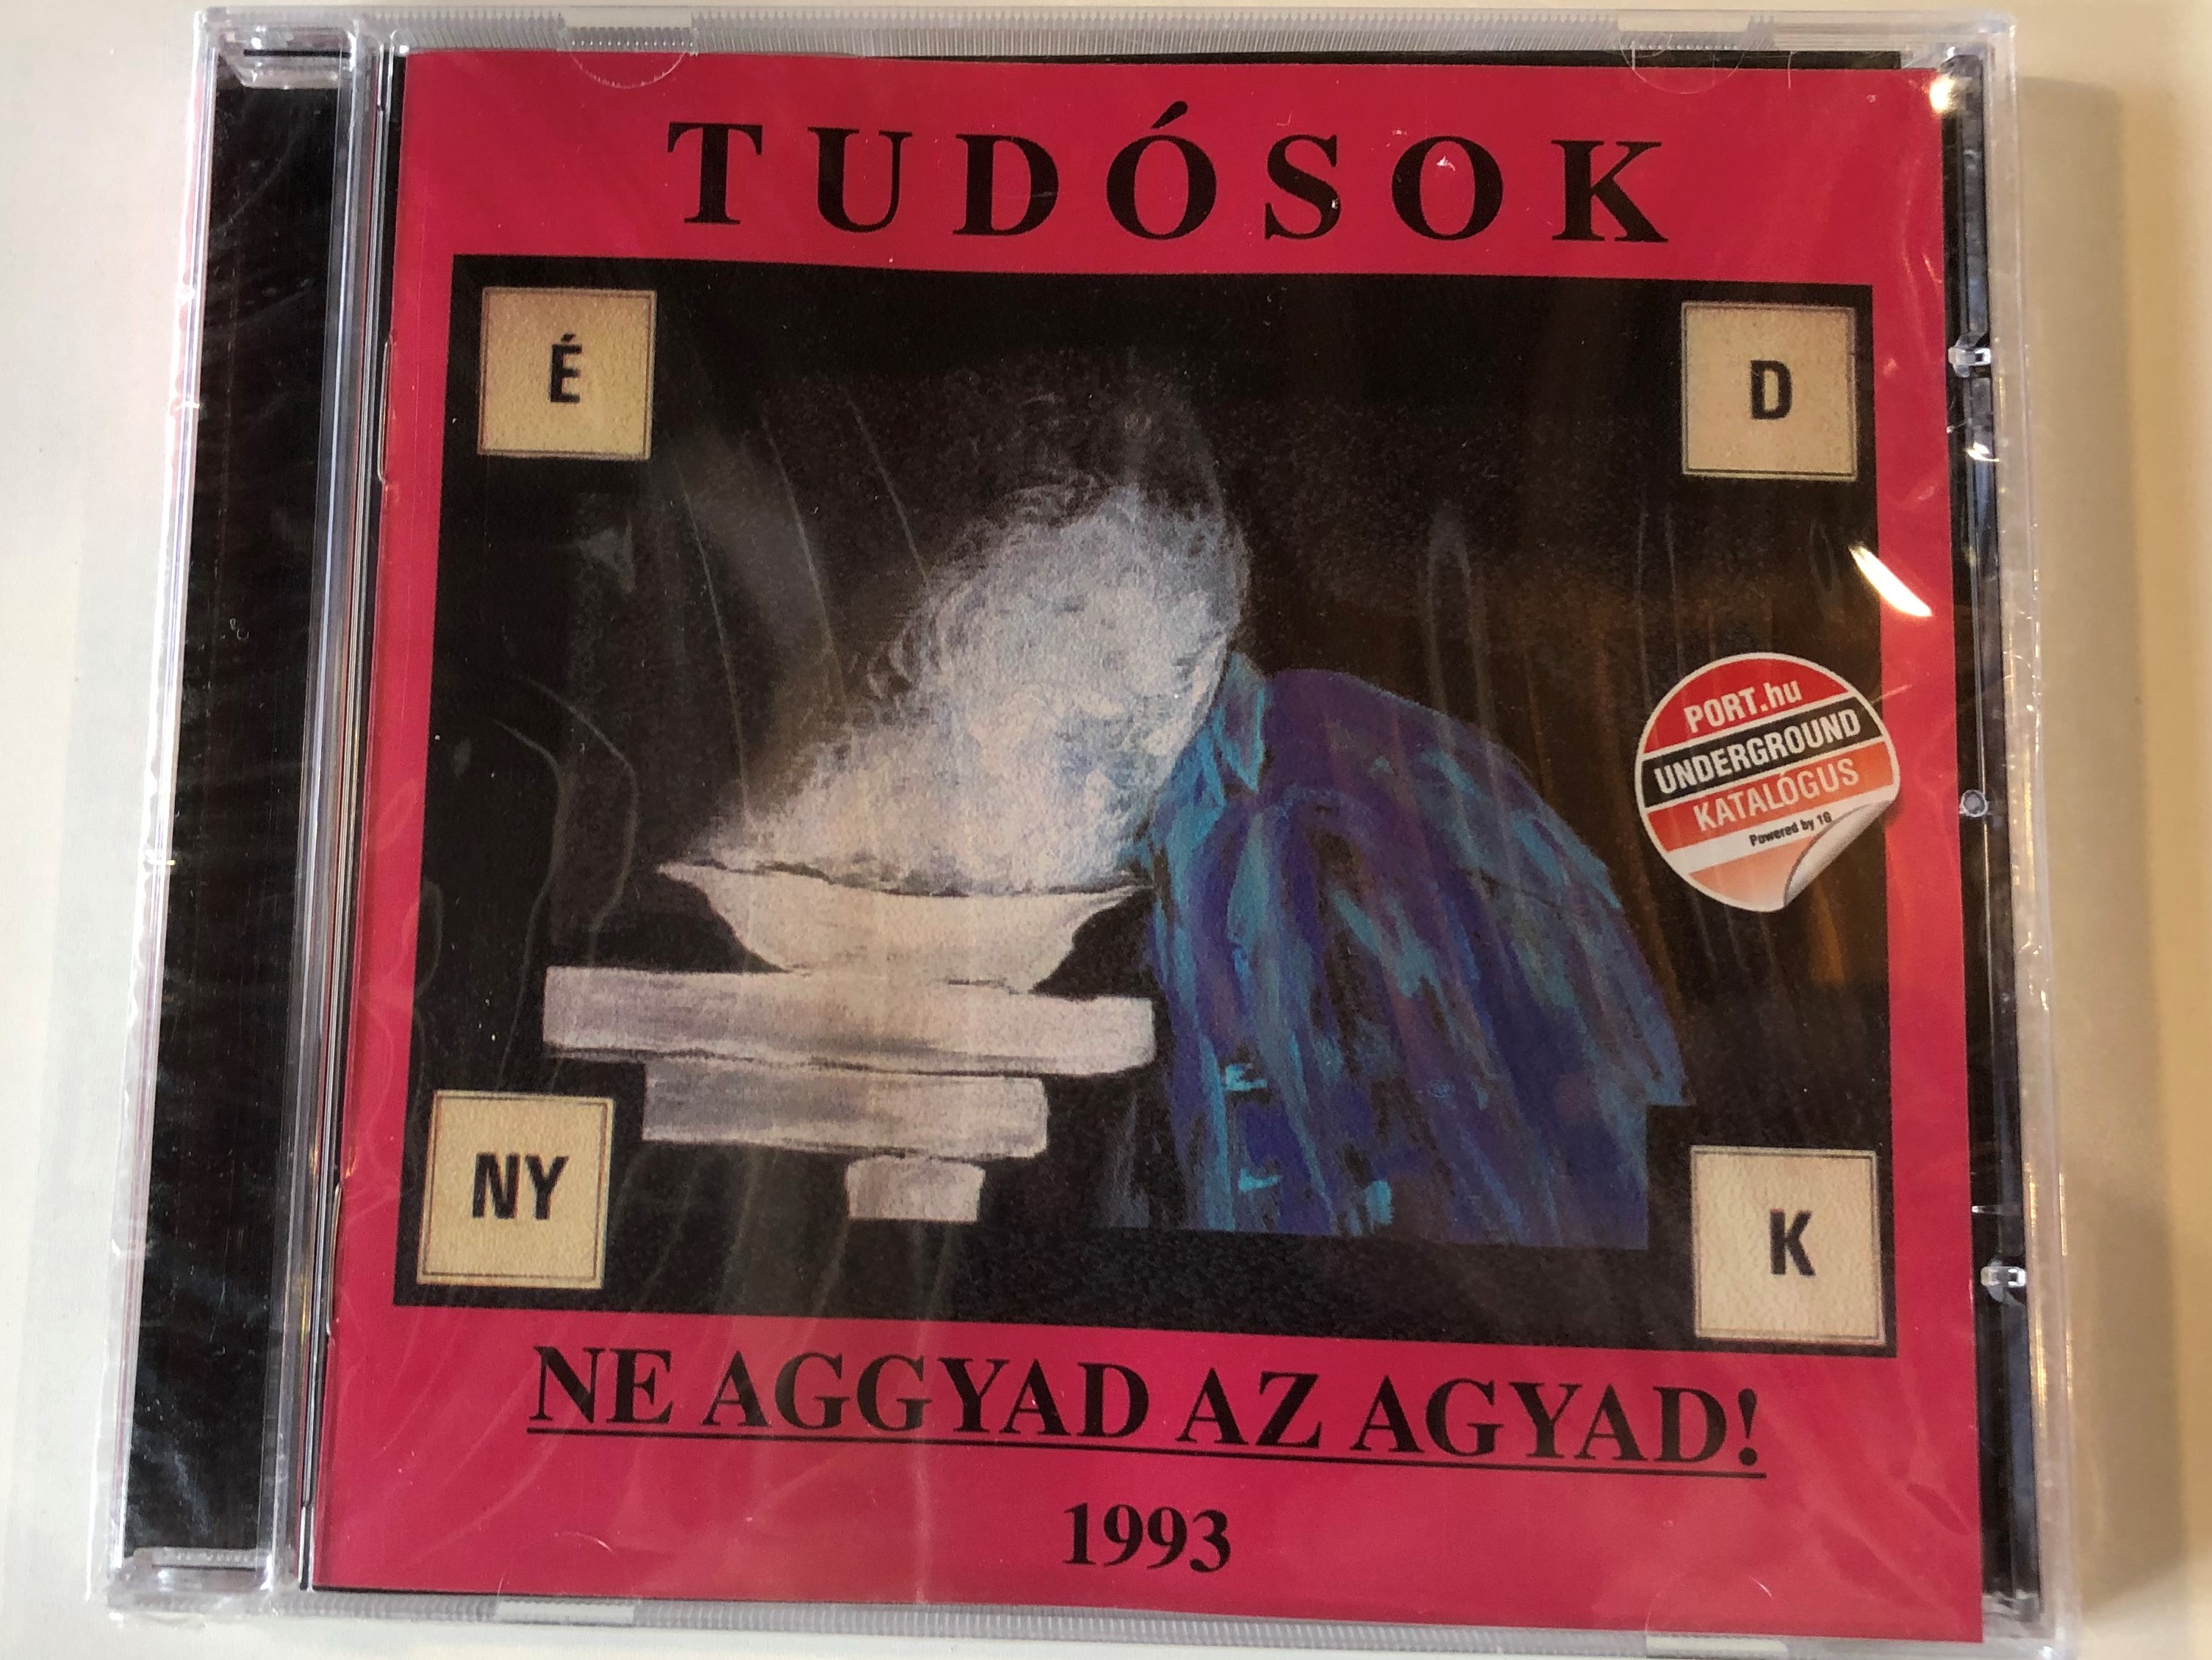 tud-sok-ne-aggyad-az-agyad-1993-port.hu-underground-katal-gus-1g-records-audio-cd-2009-1g2009103010-2-1-.jpg